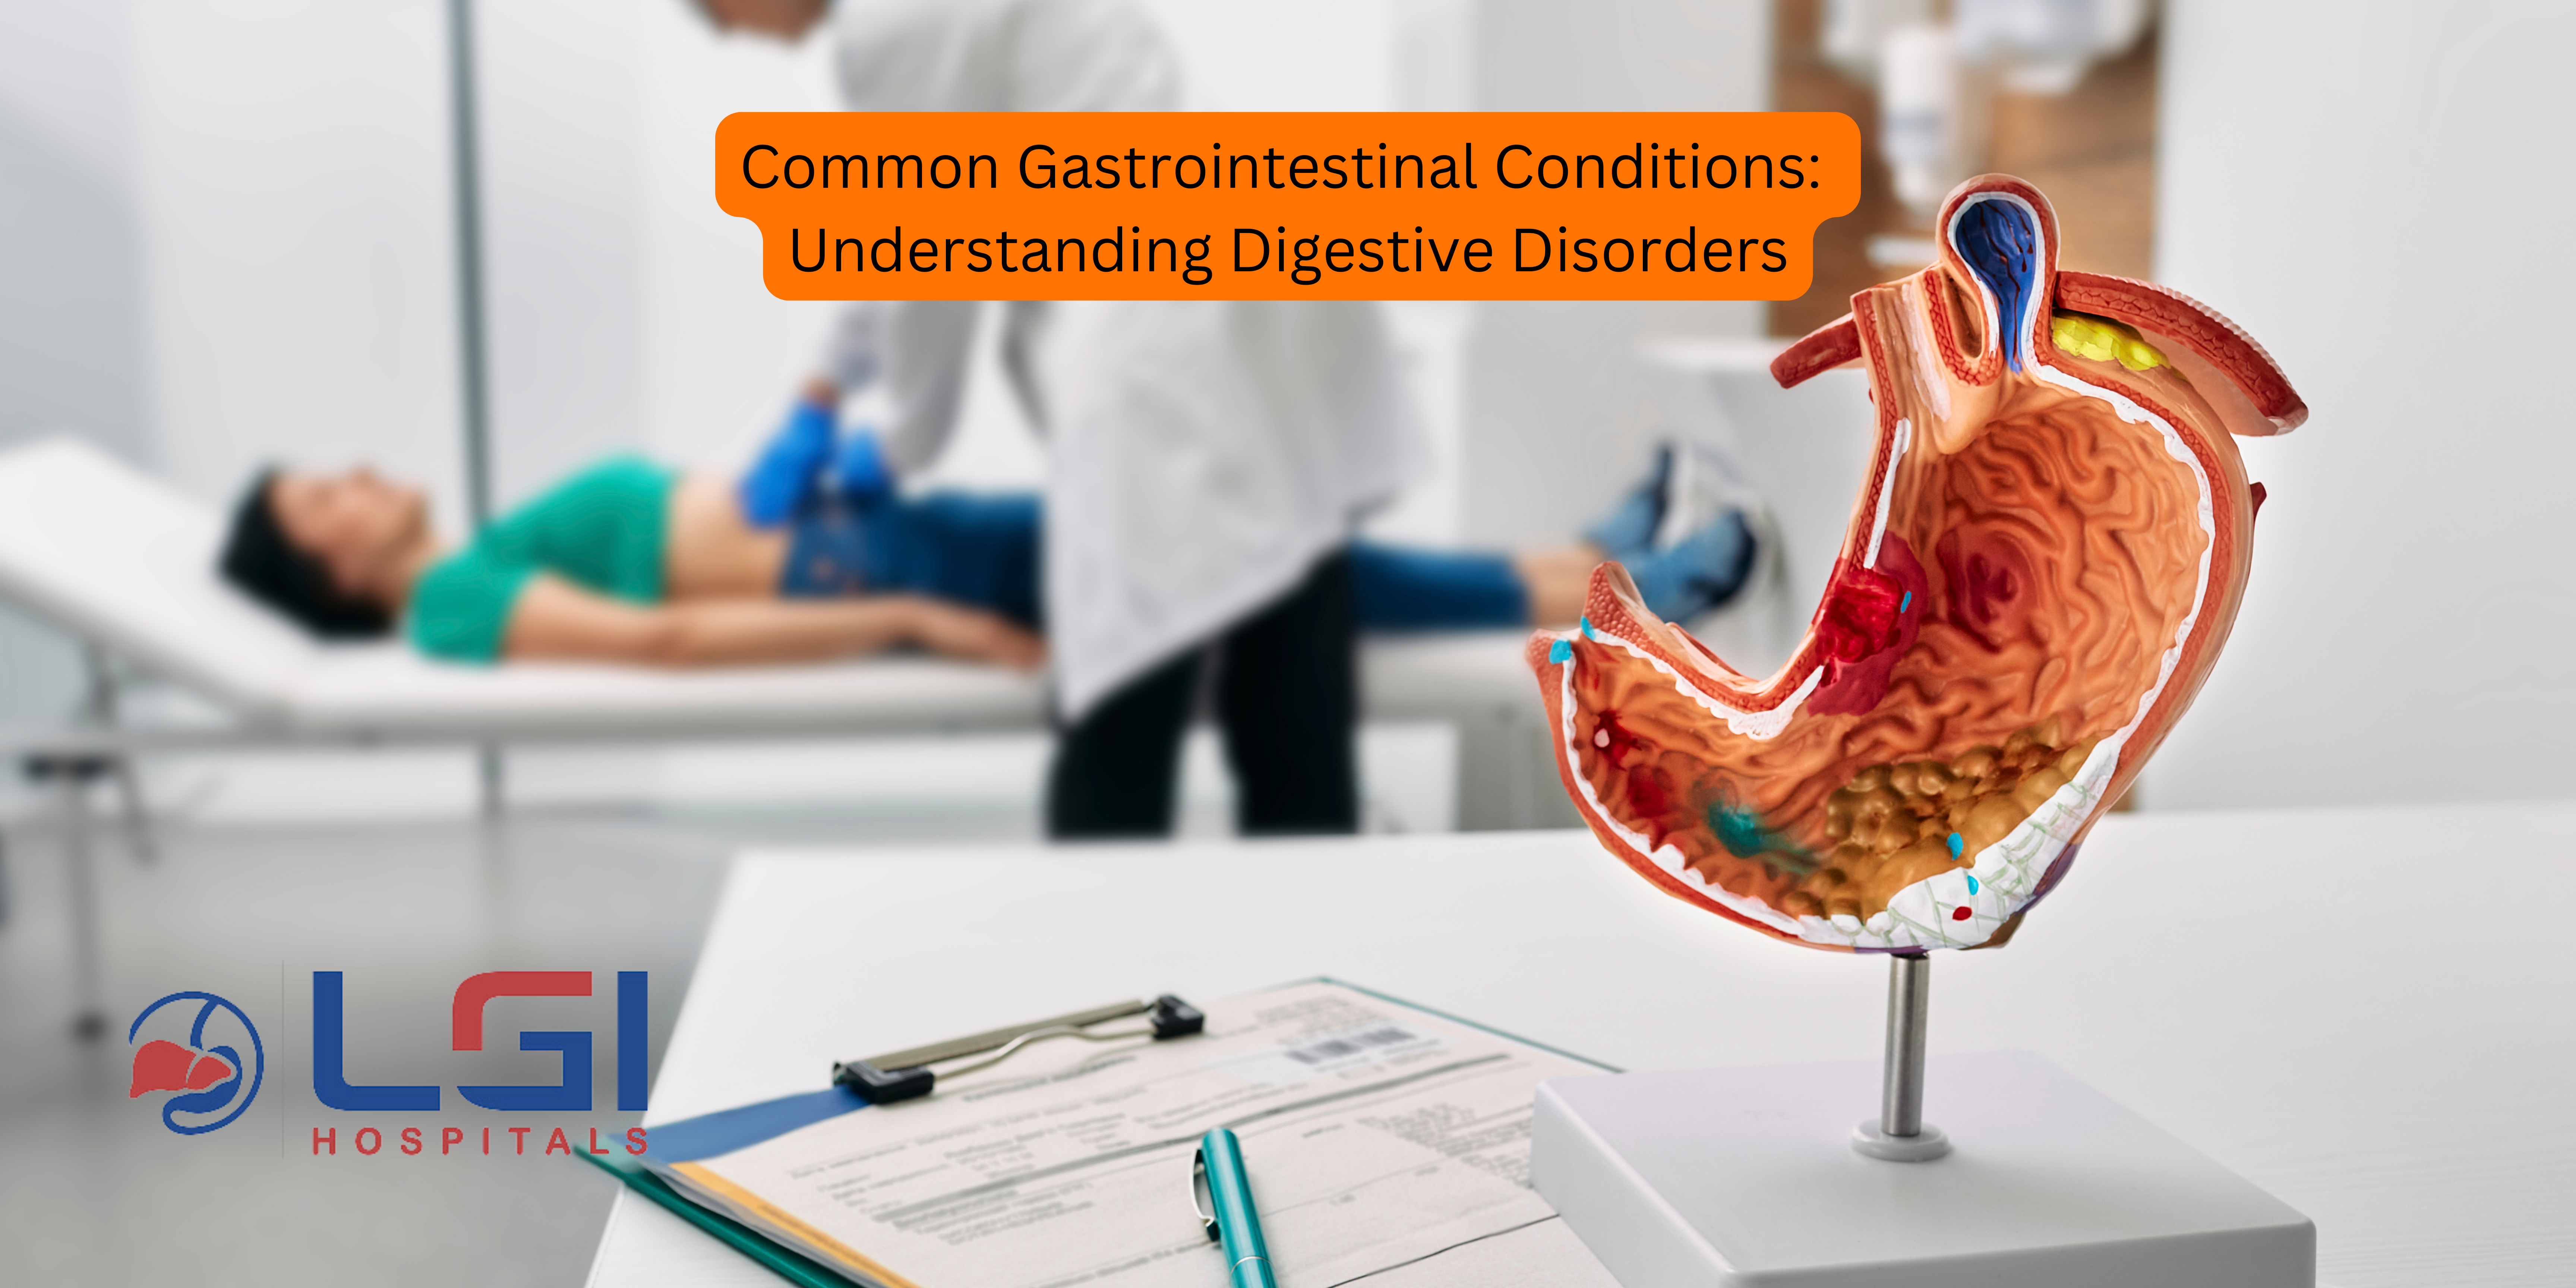 Common gastroenterology conditions